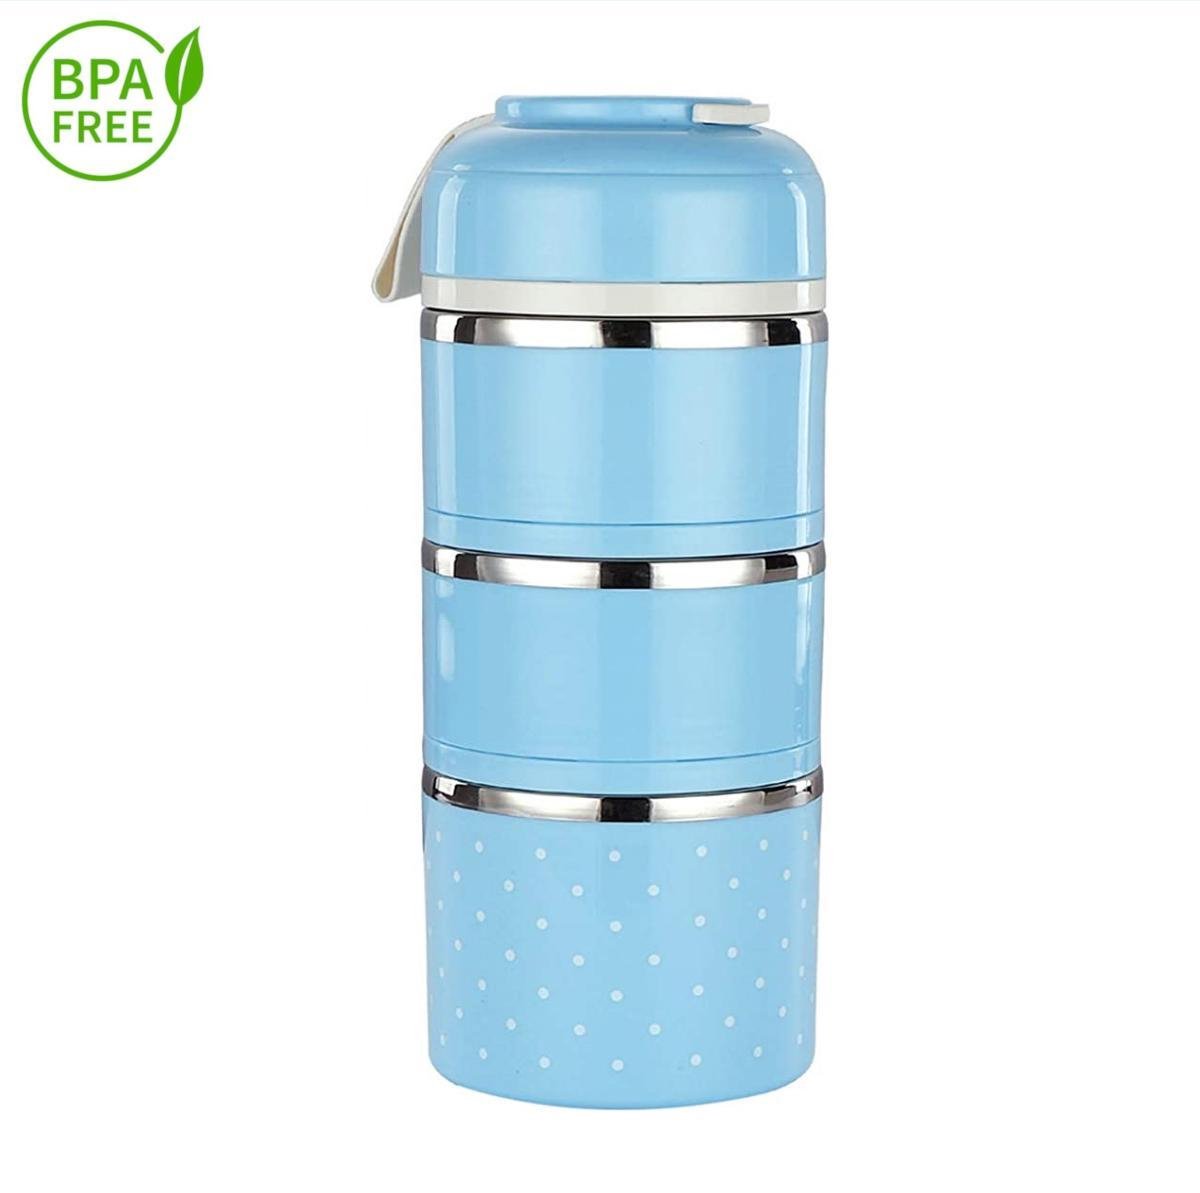 Evolize Bento Lunchbox in Japanse Stijl - Bento Lunch Box - 6 Compartimenten - Lekvrij - BPA-vrij - Milieuvriendelijk RVS - 1650ml - Blauw